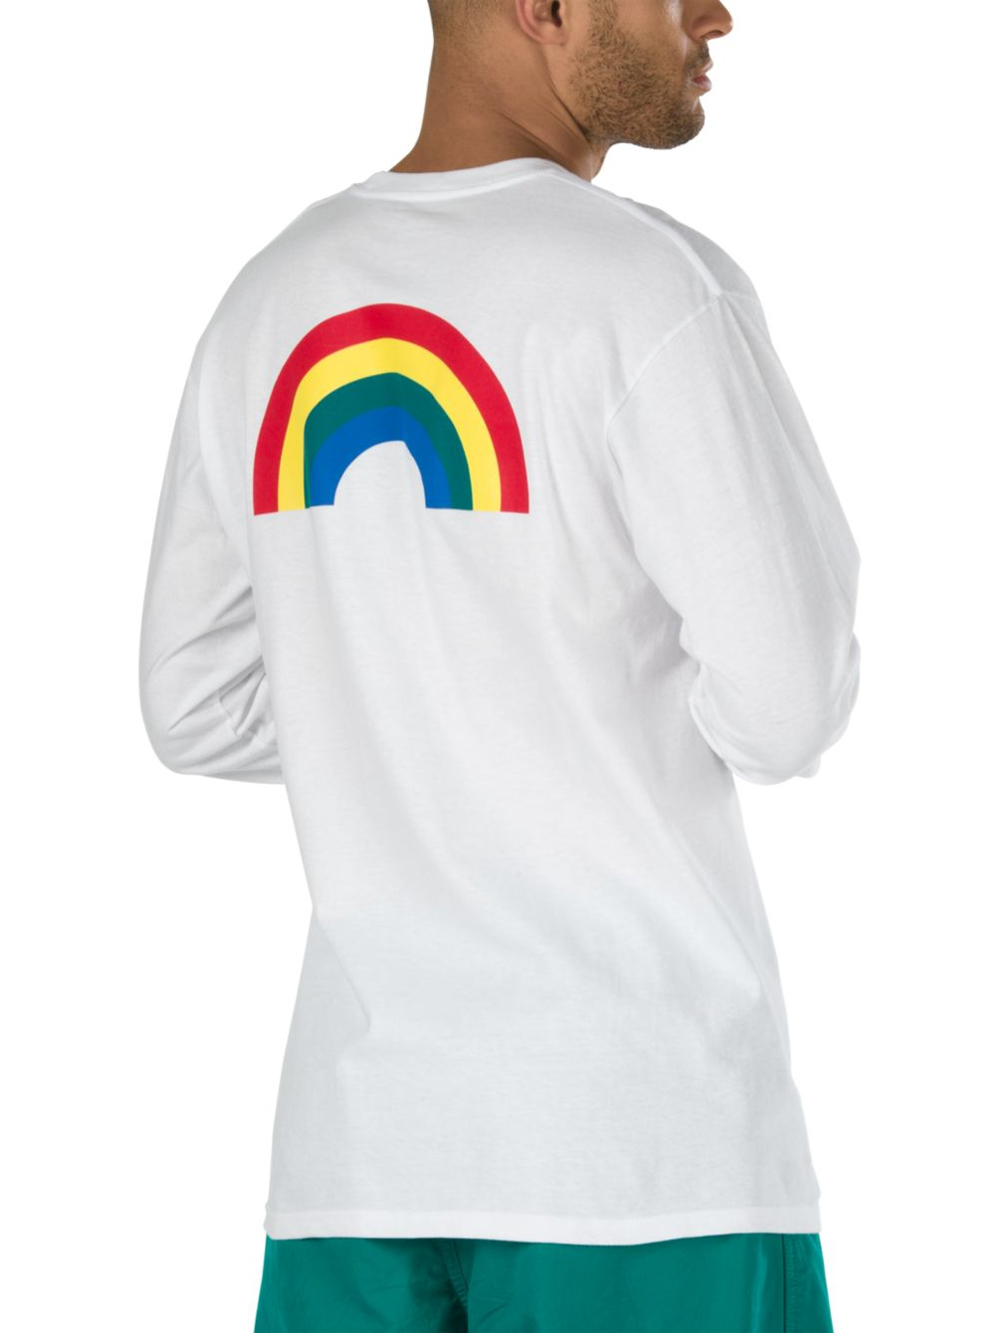 vans rainbow shirt long sleeve